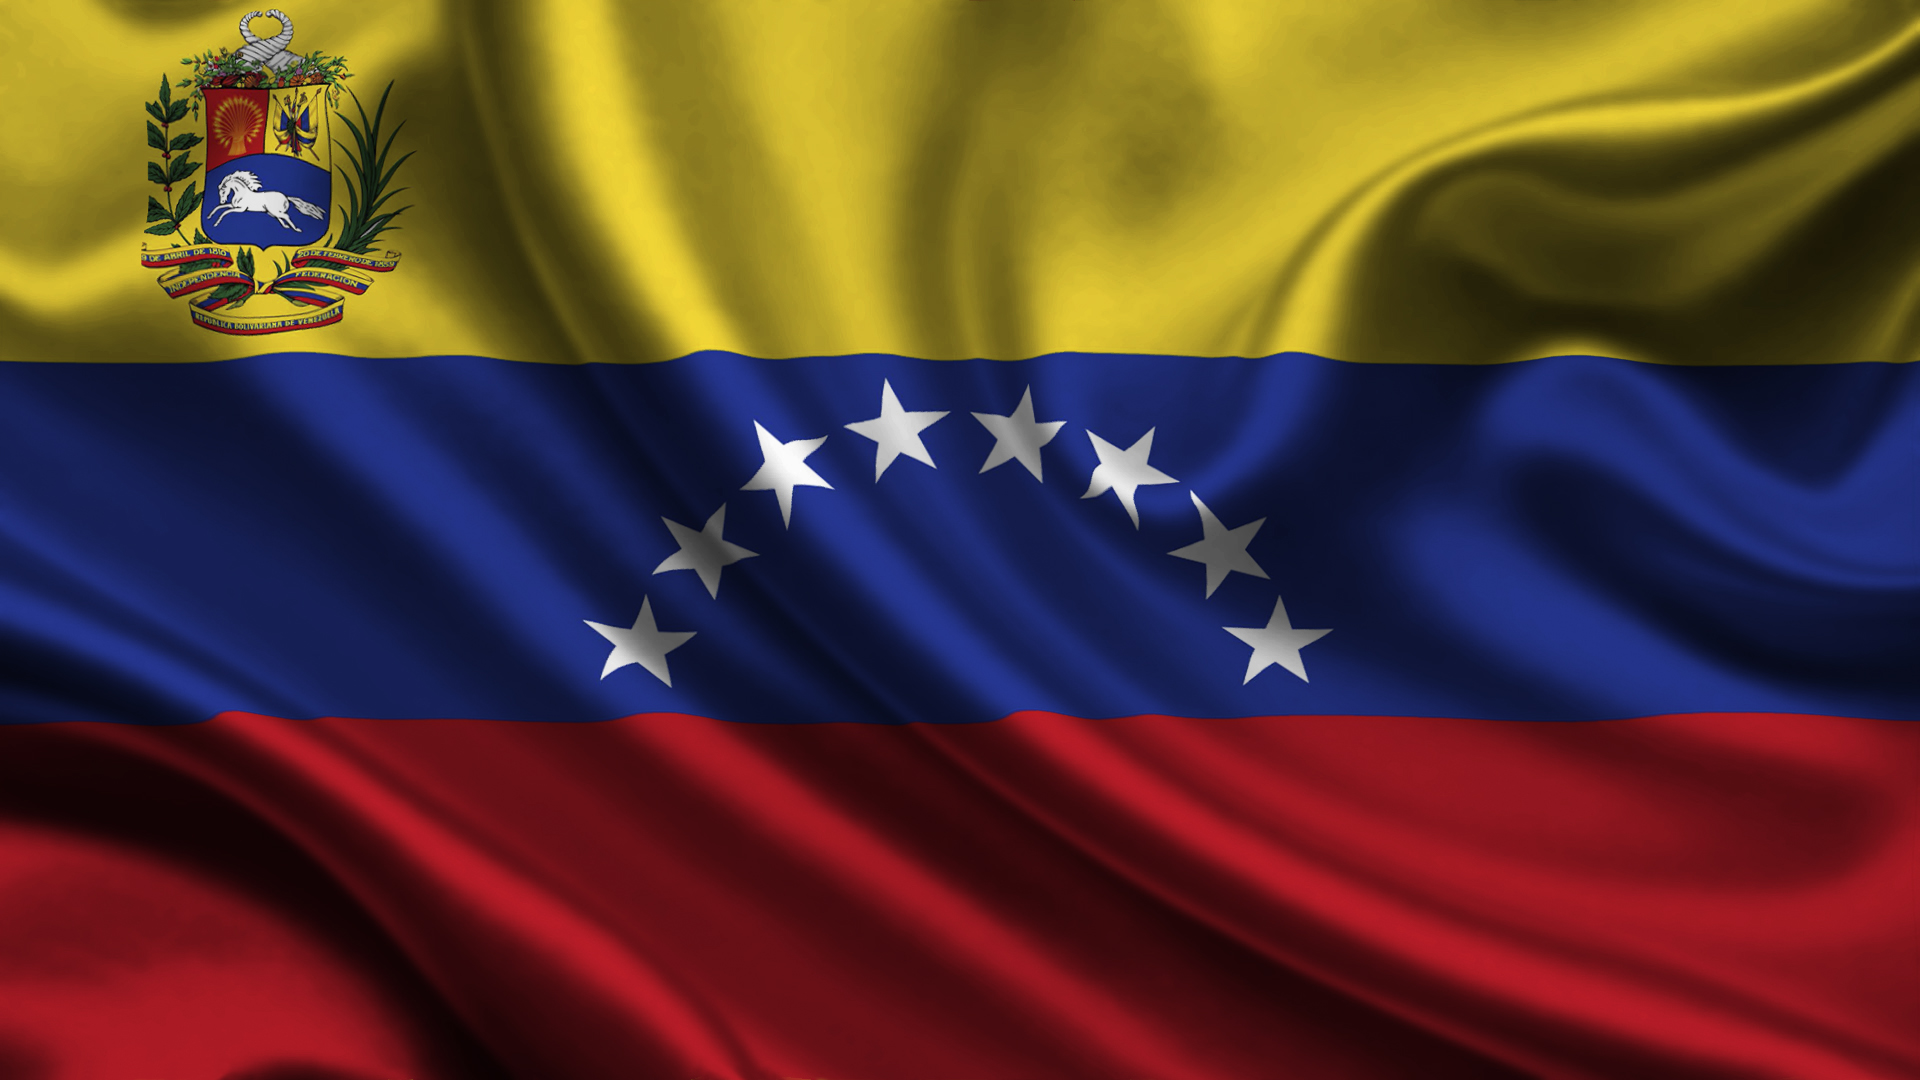 Venezuela HD Wallpapers  Desktop and Mobile Images  Photos